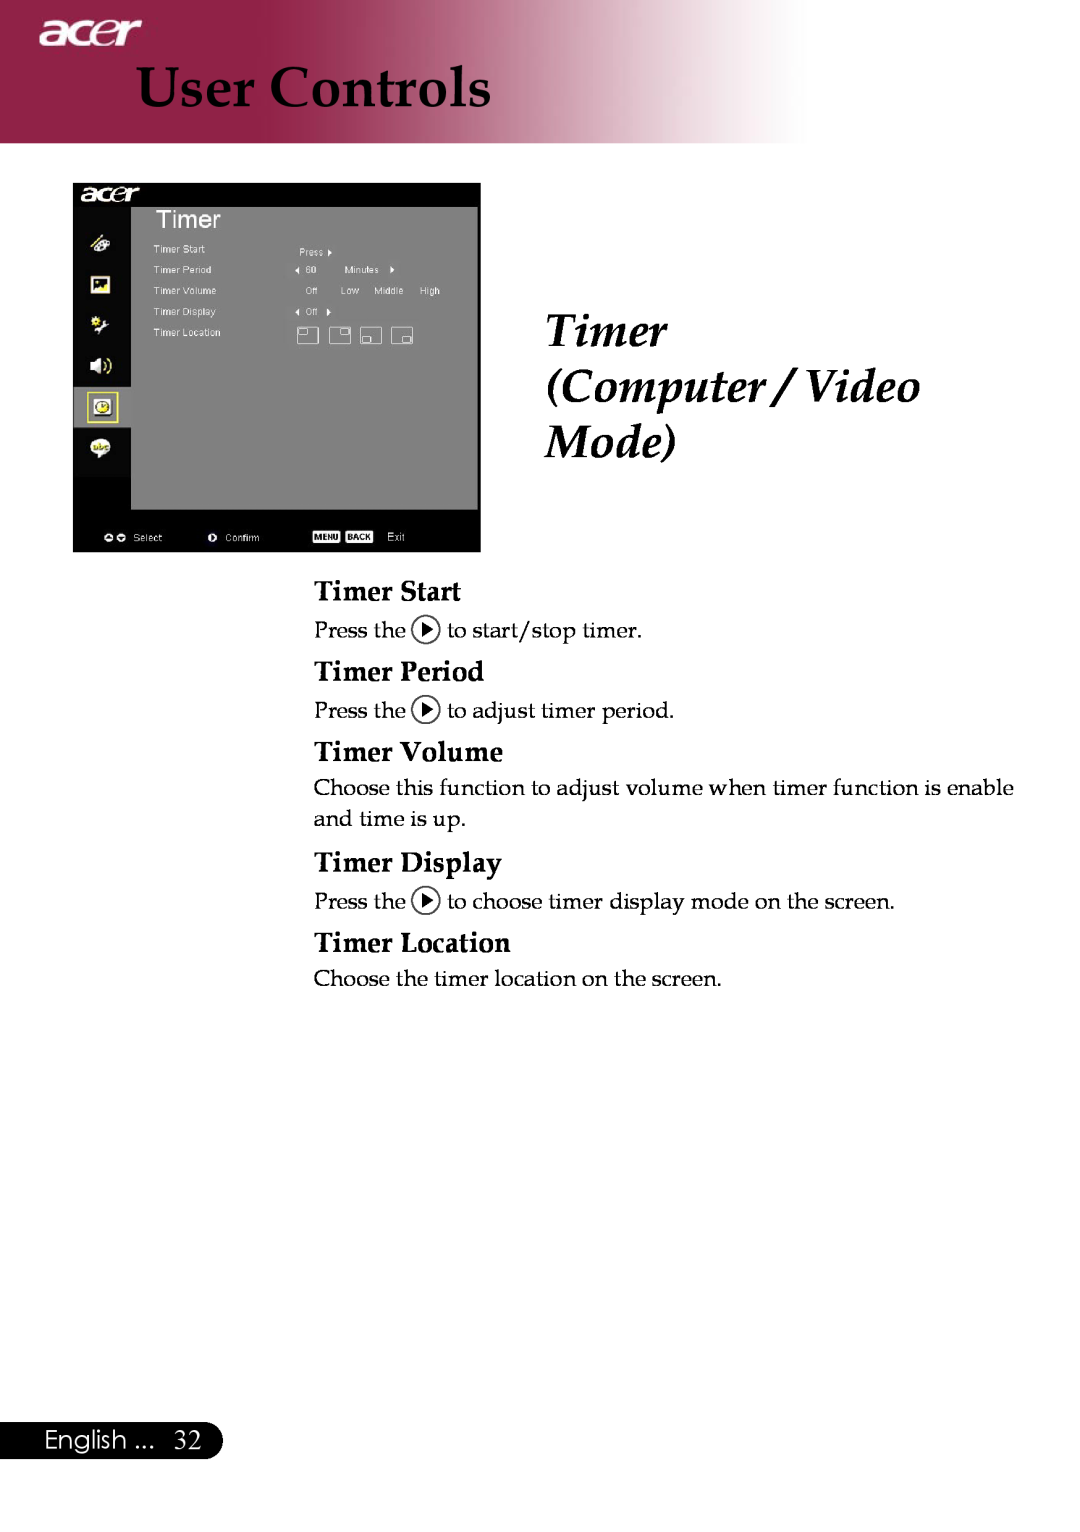 Acer PD323 Timer Computer / Video Mode, Timer Start, Timer Period, Timer Volume, Timer Display, Timer Location, English 